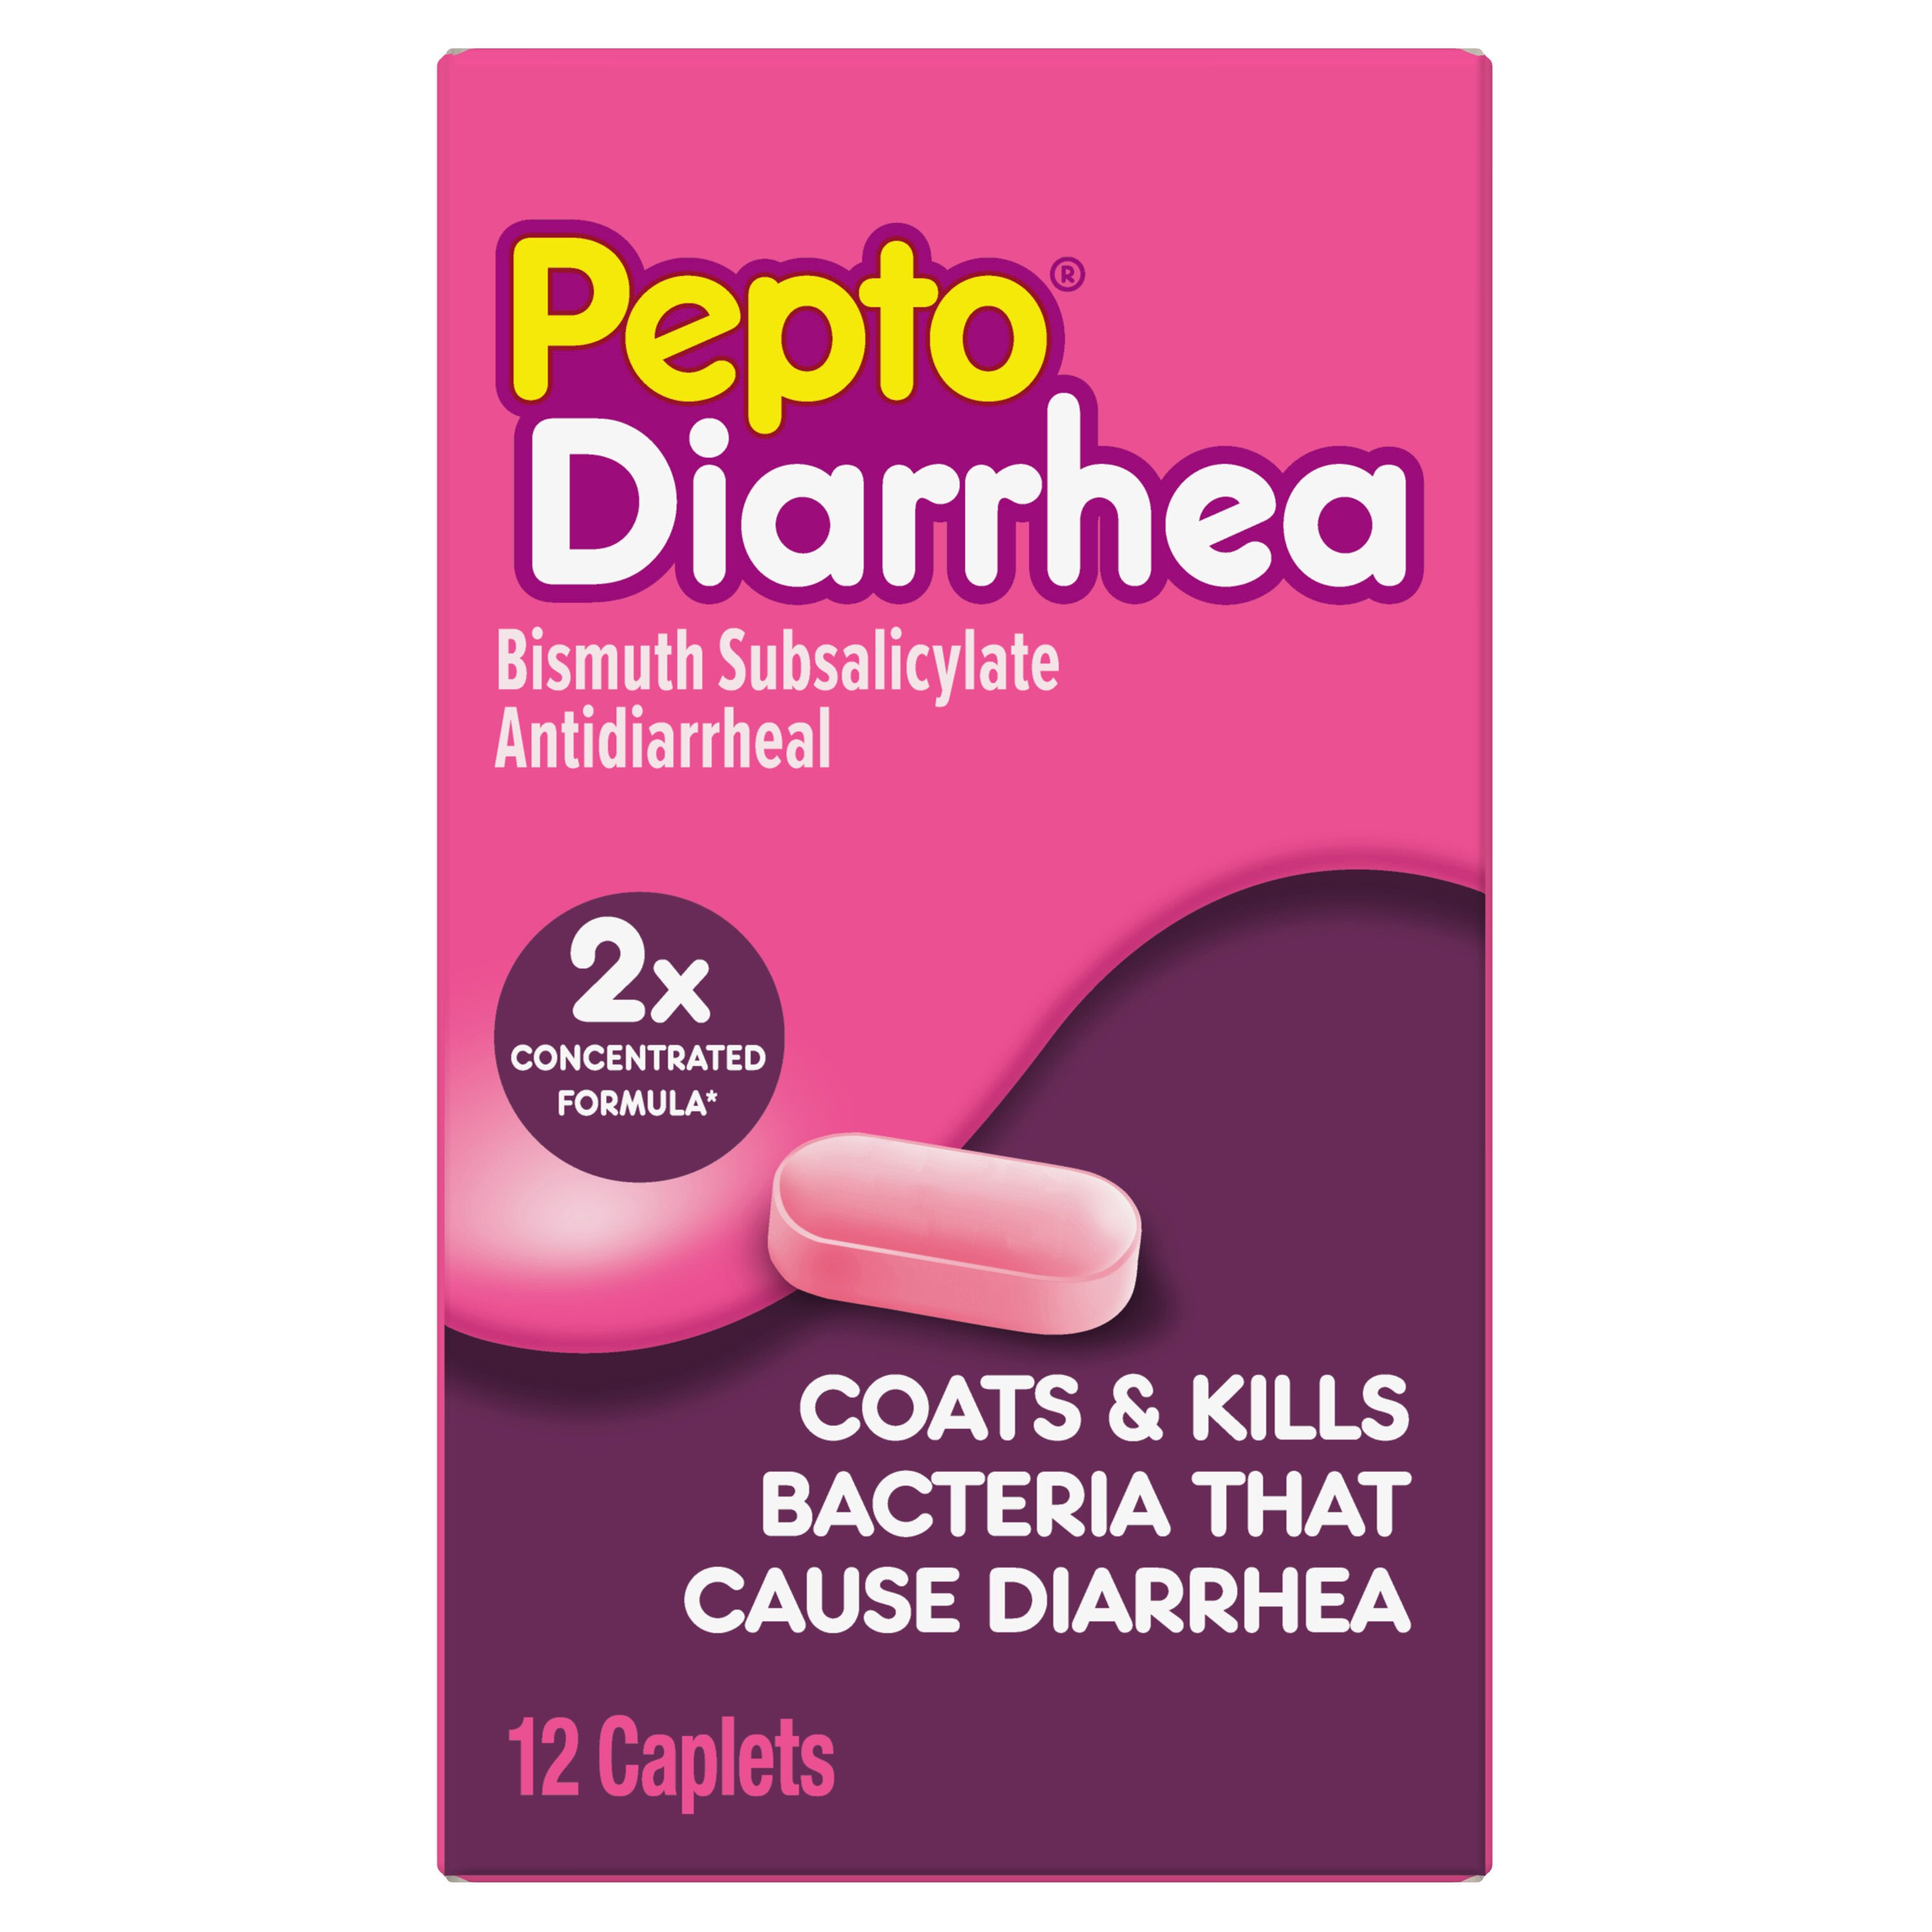 Pepto Bismol Diarrhea CAPLETS, Anti Diarrhea Medicine for Fast and Effective Diarrhea Relief, 12ct Anti Diarrheal Pills